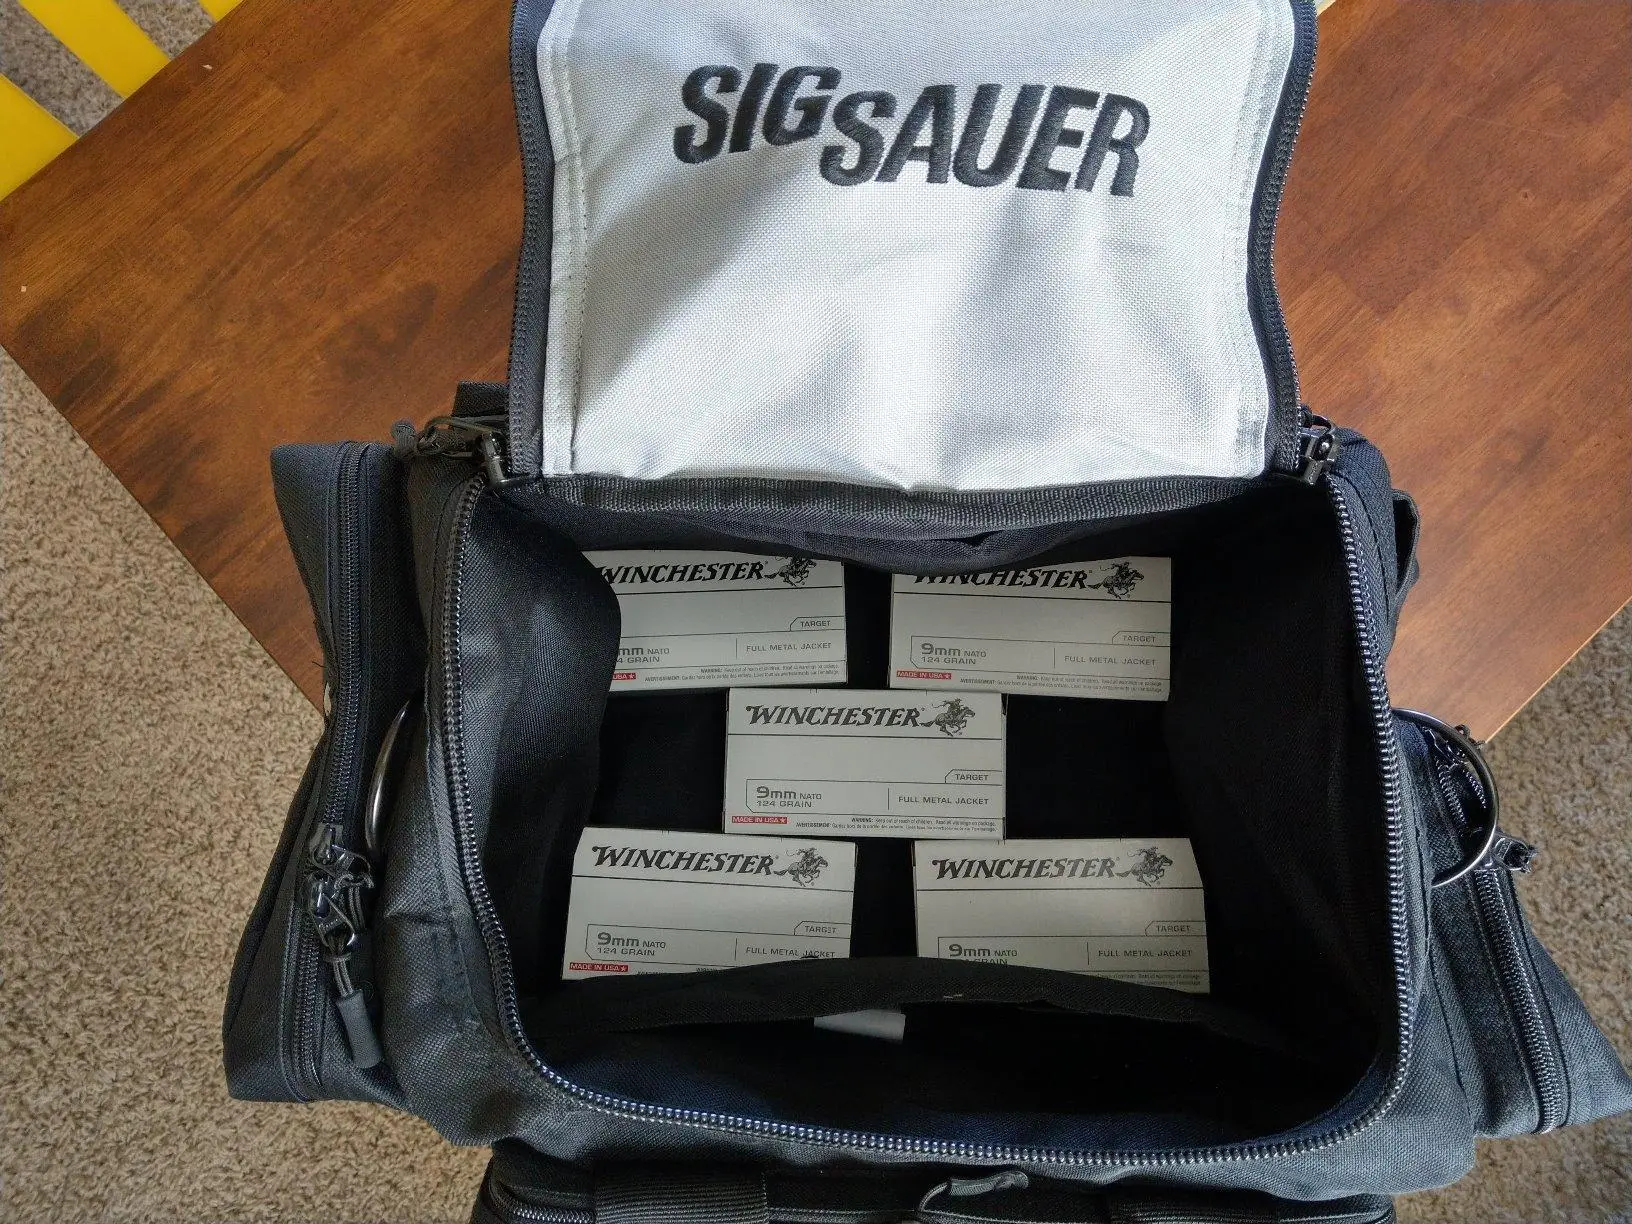 Sig Sauer Range Bag Review